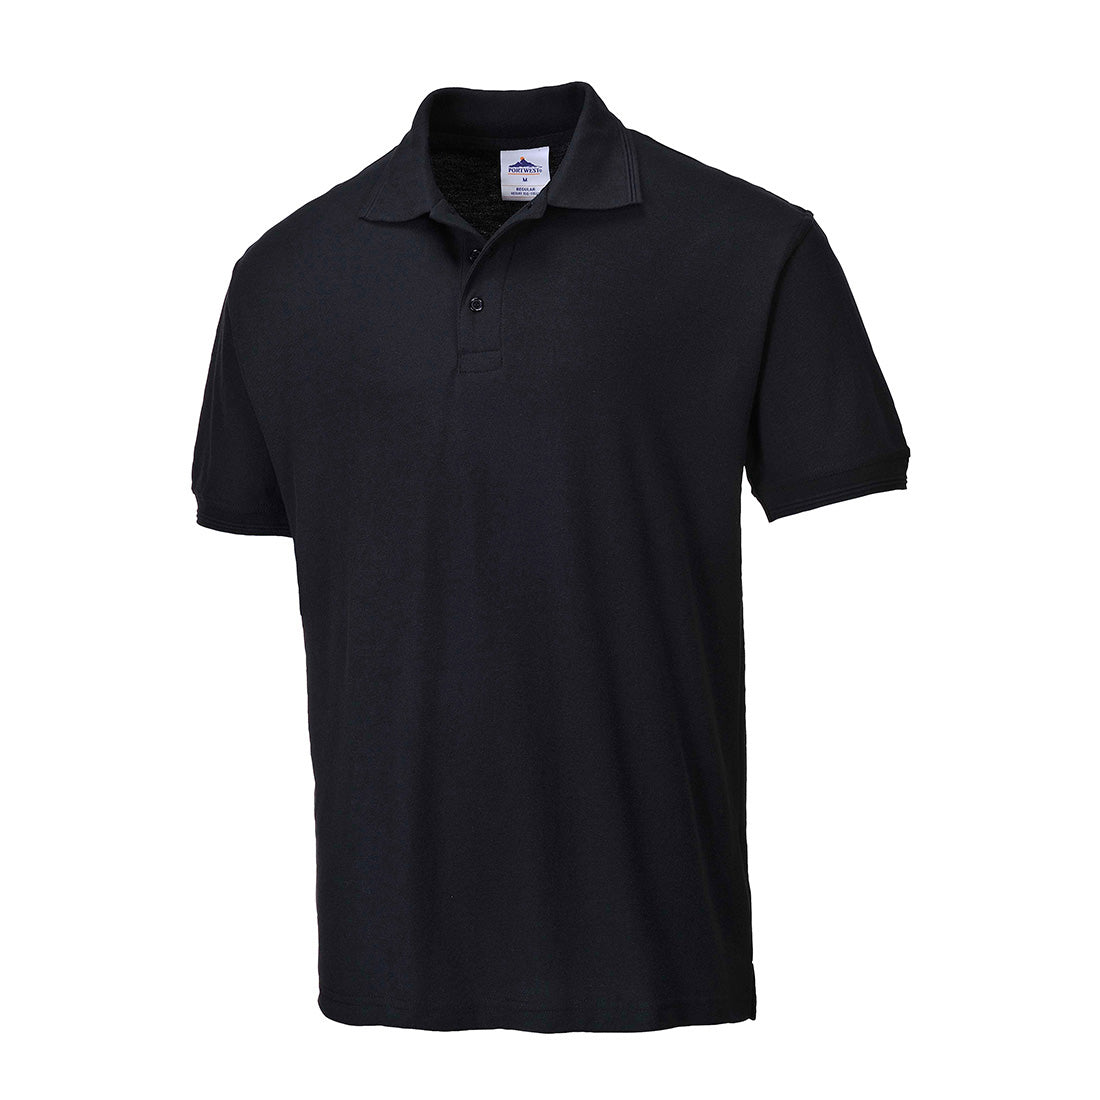 Naples Polo Shirt- B210 black front